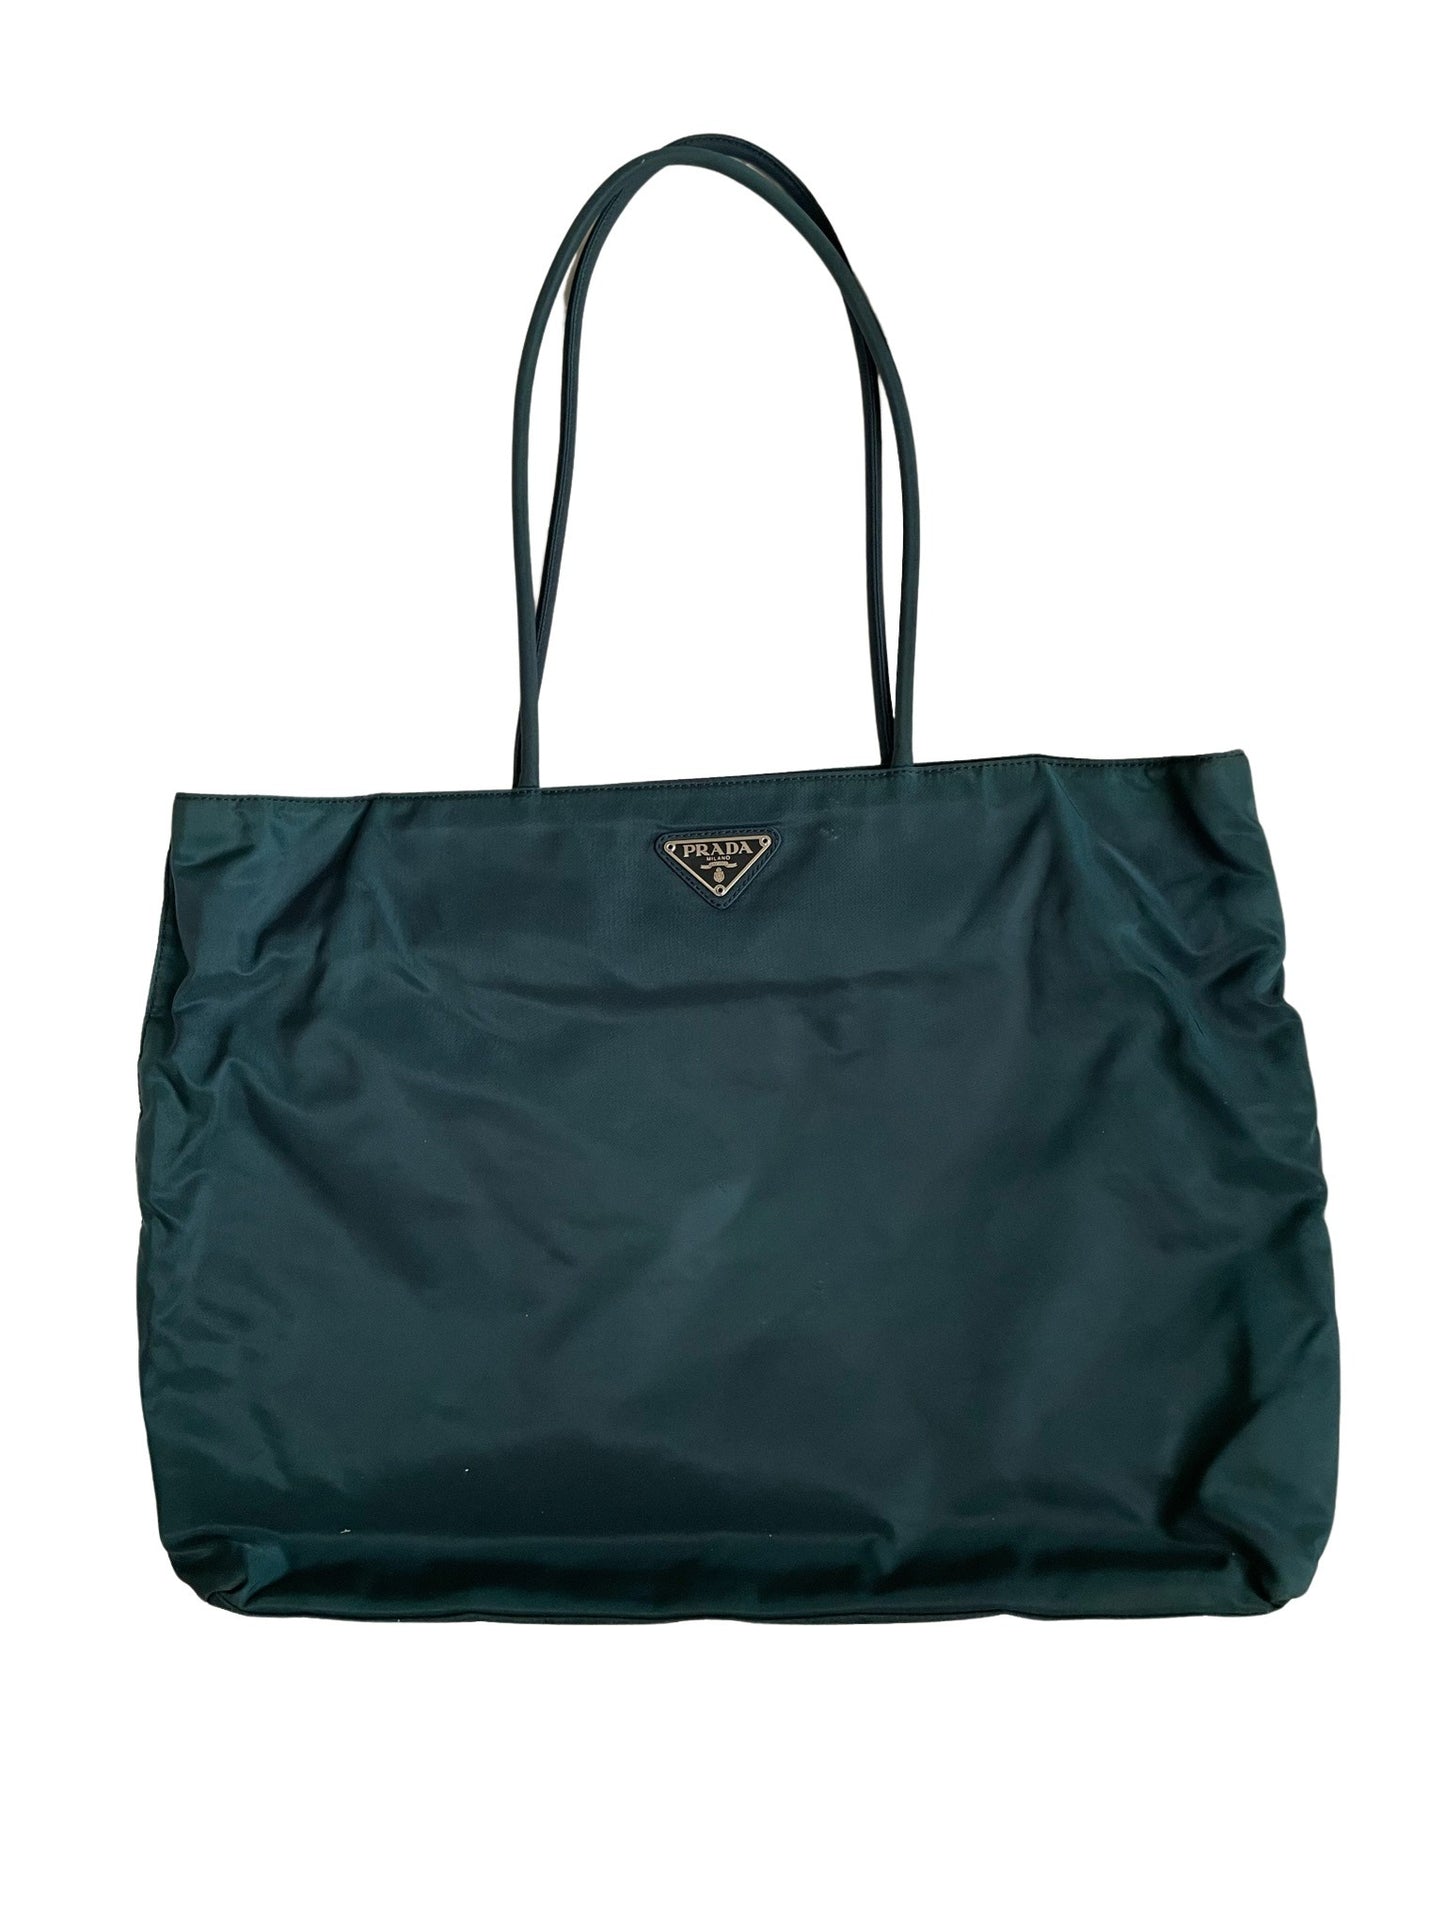 Prada Green Nylon Tote Bag